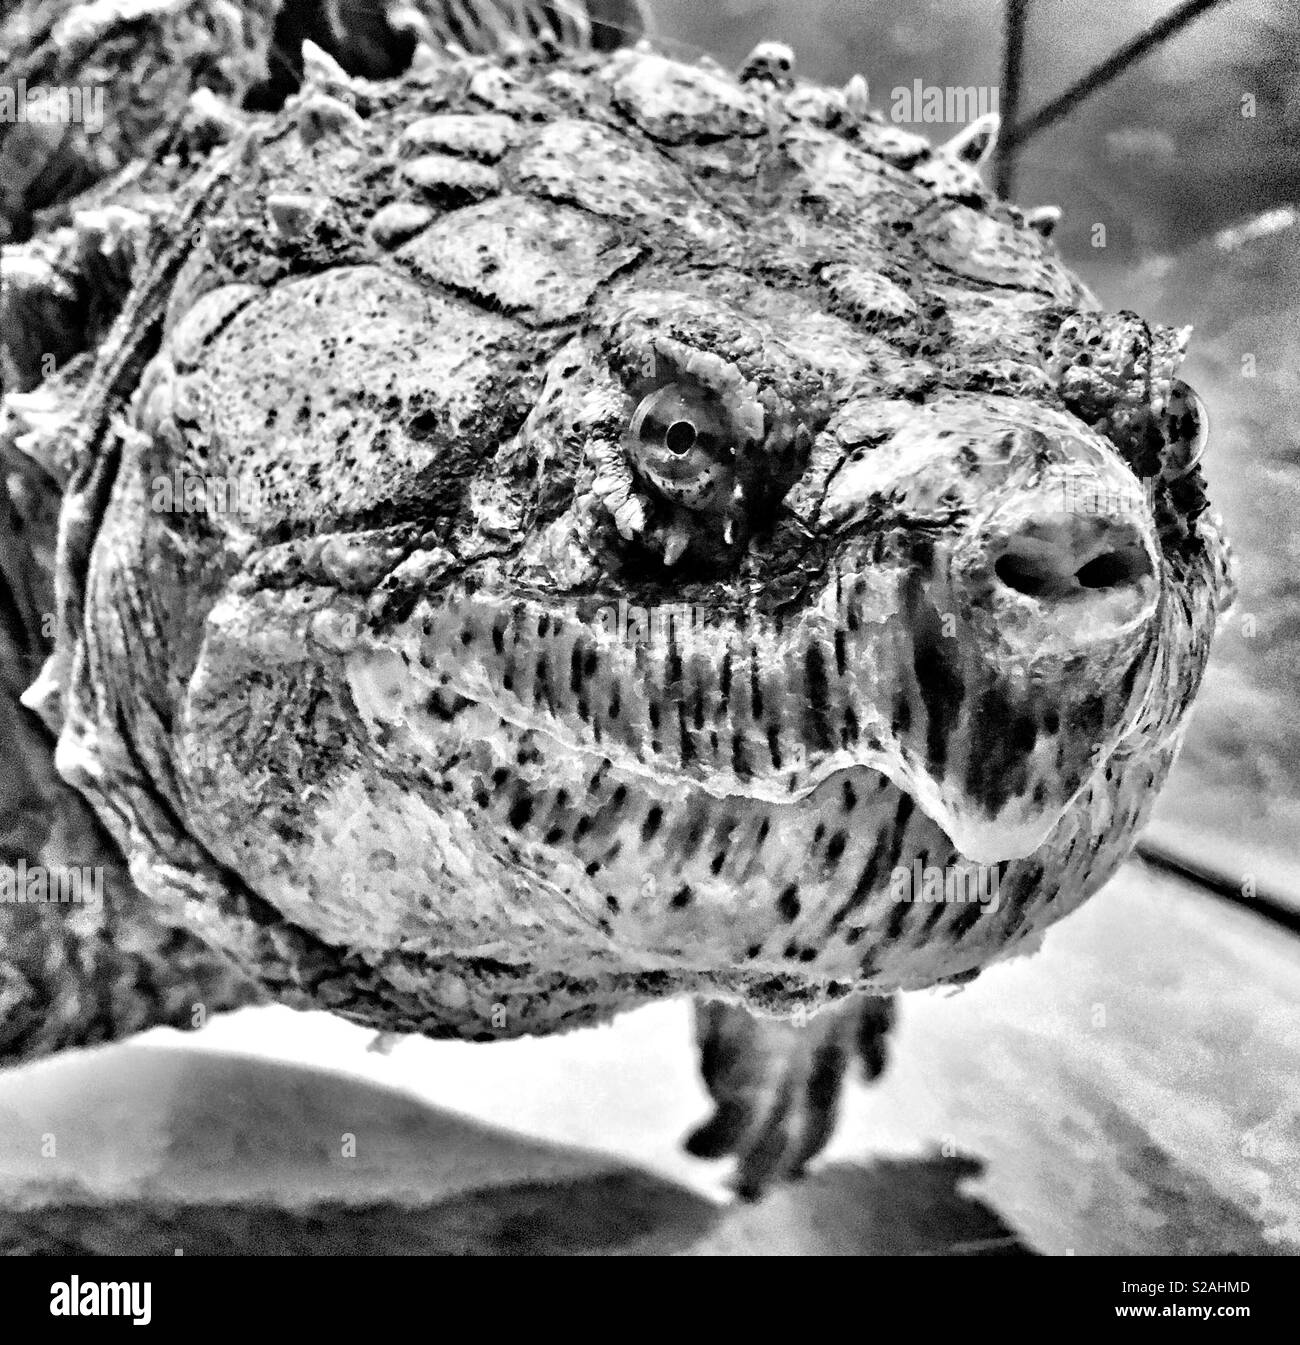 Florida Snapping Turtle closeup Stockfoto